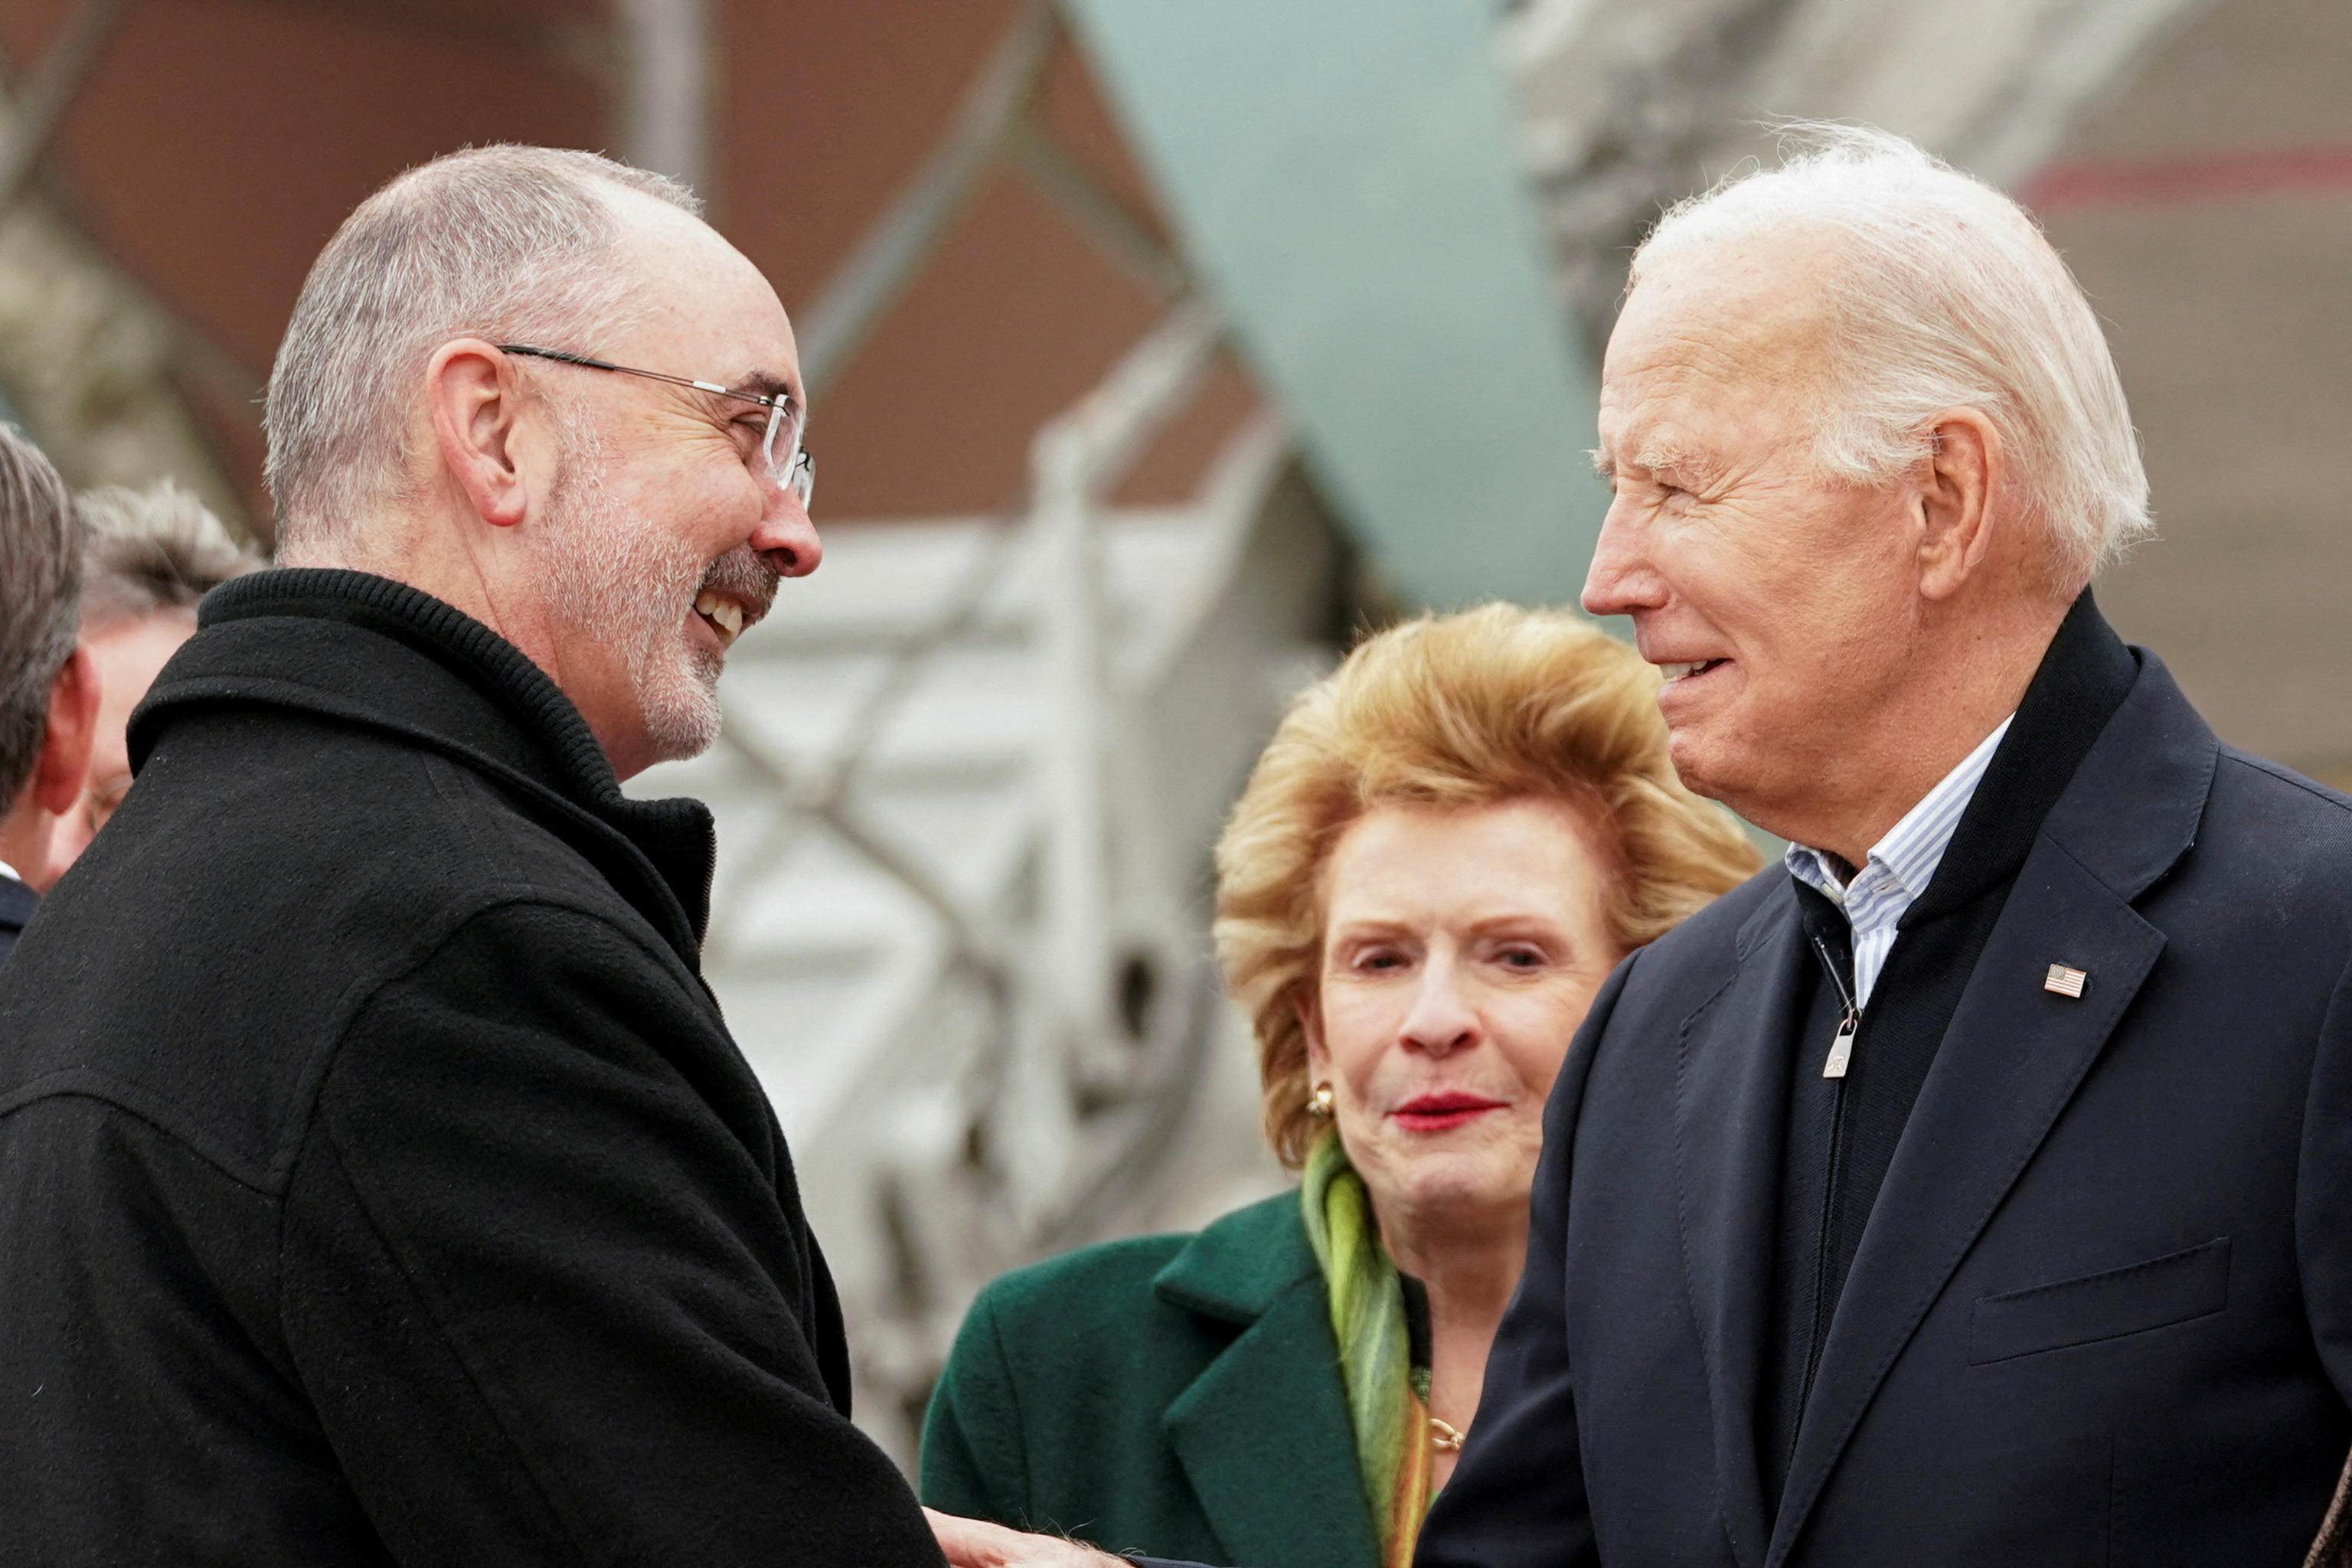 U.S. President Biden visits autoworkers in the Detroit metro area